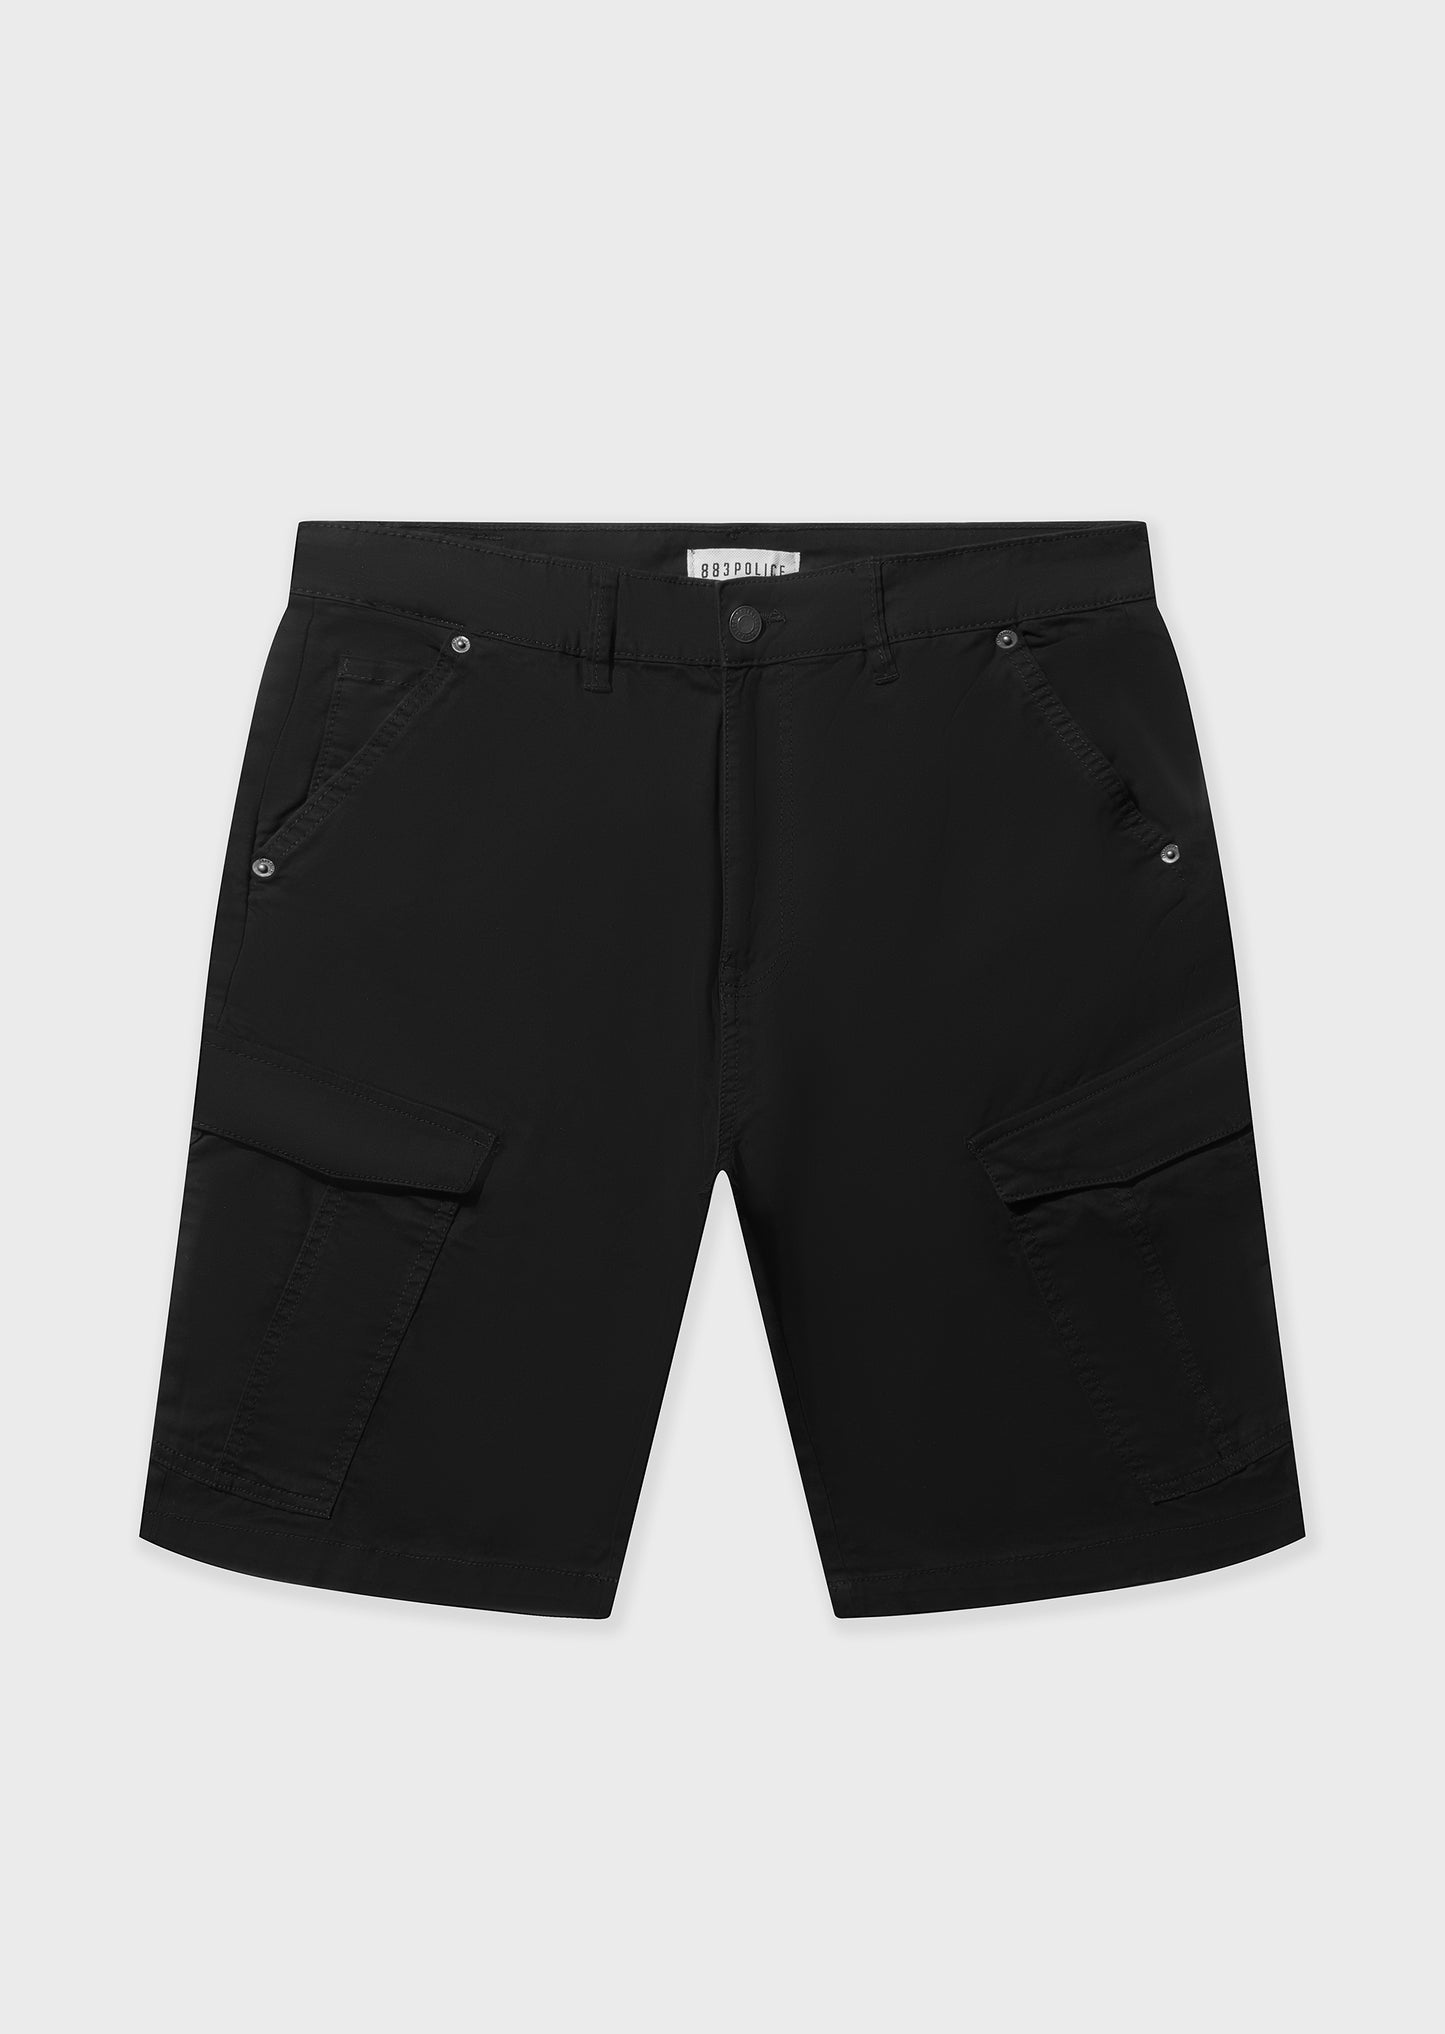 Duran Black Shorts